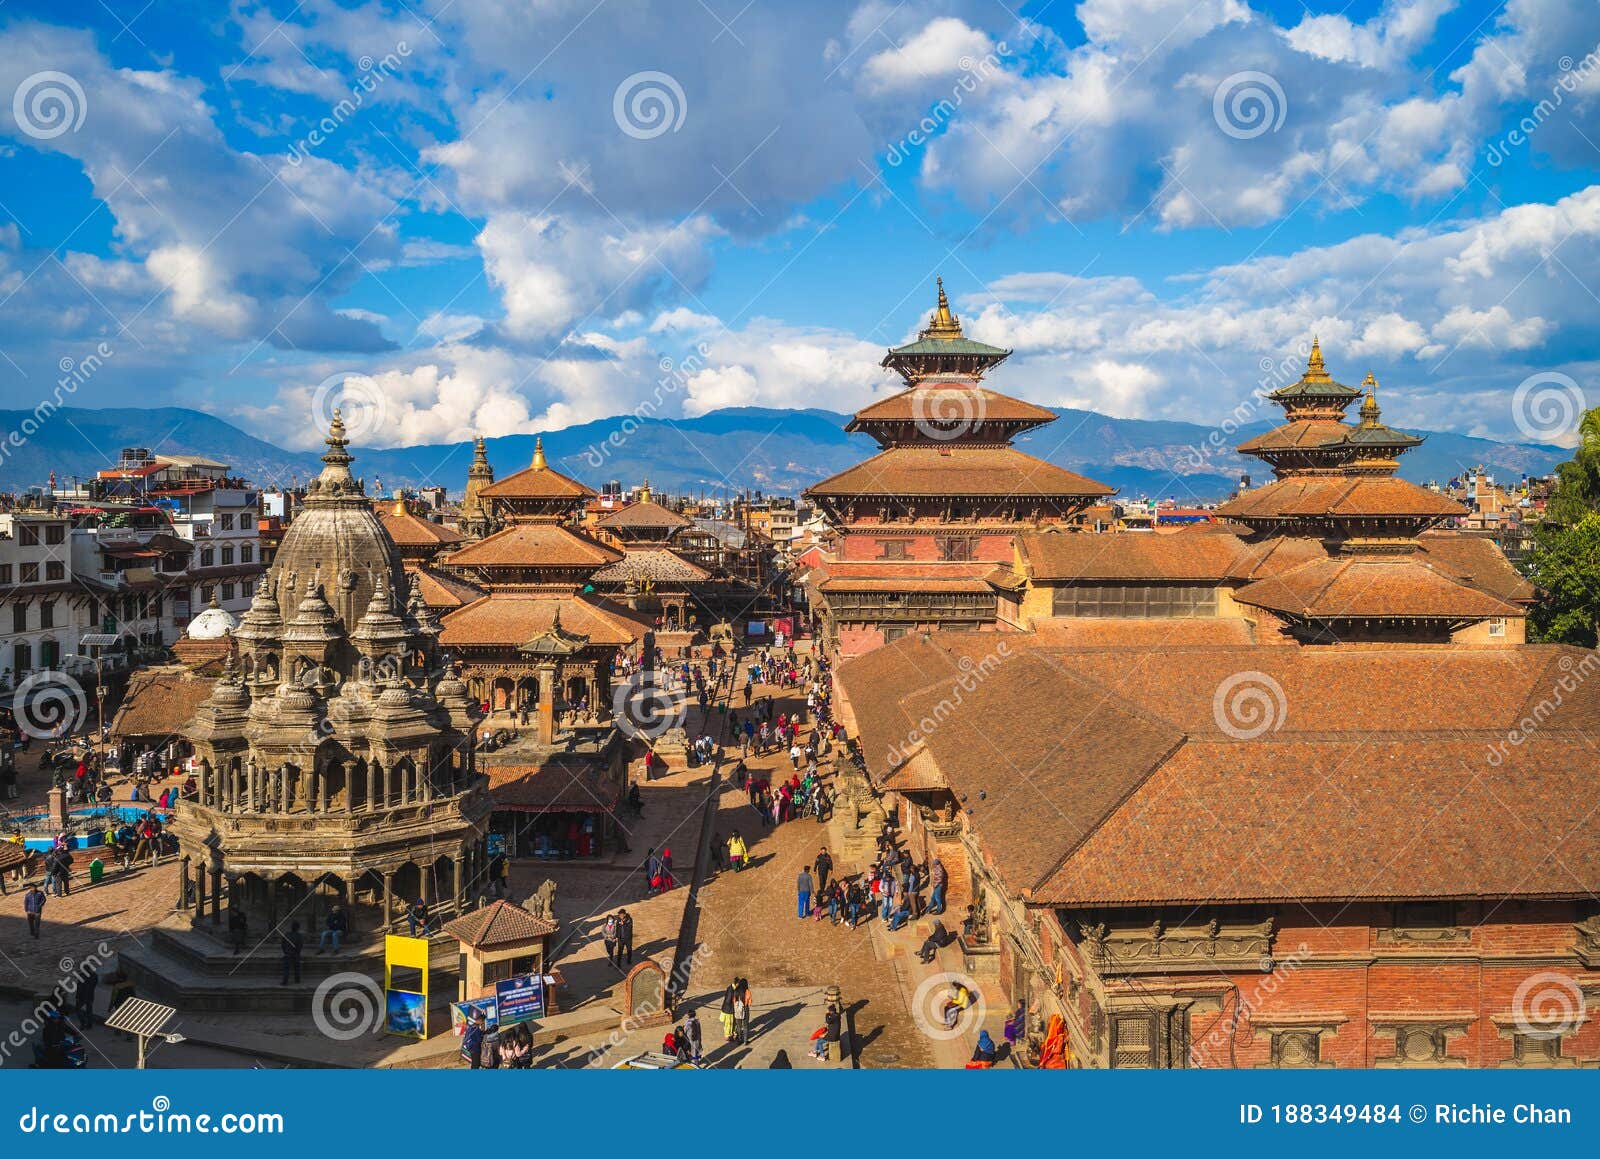 scenery of patan durbar square at kathmandu, nepal